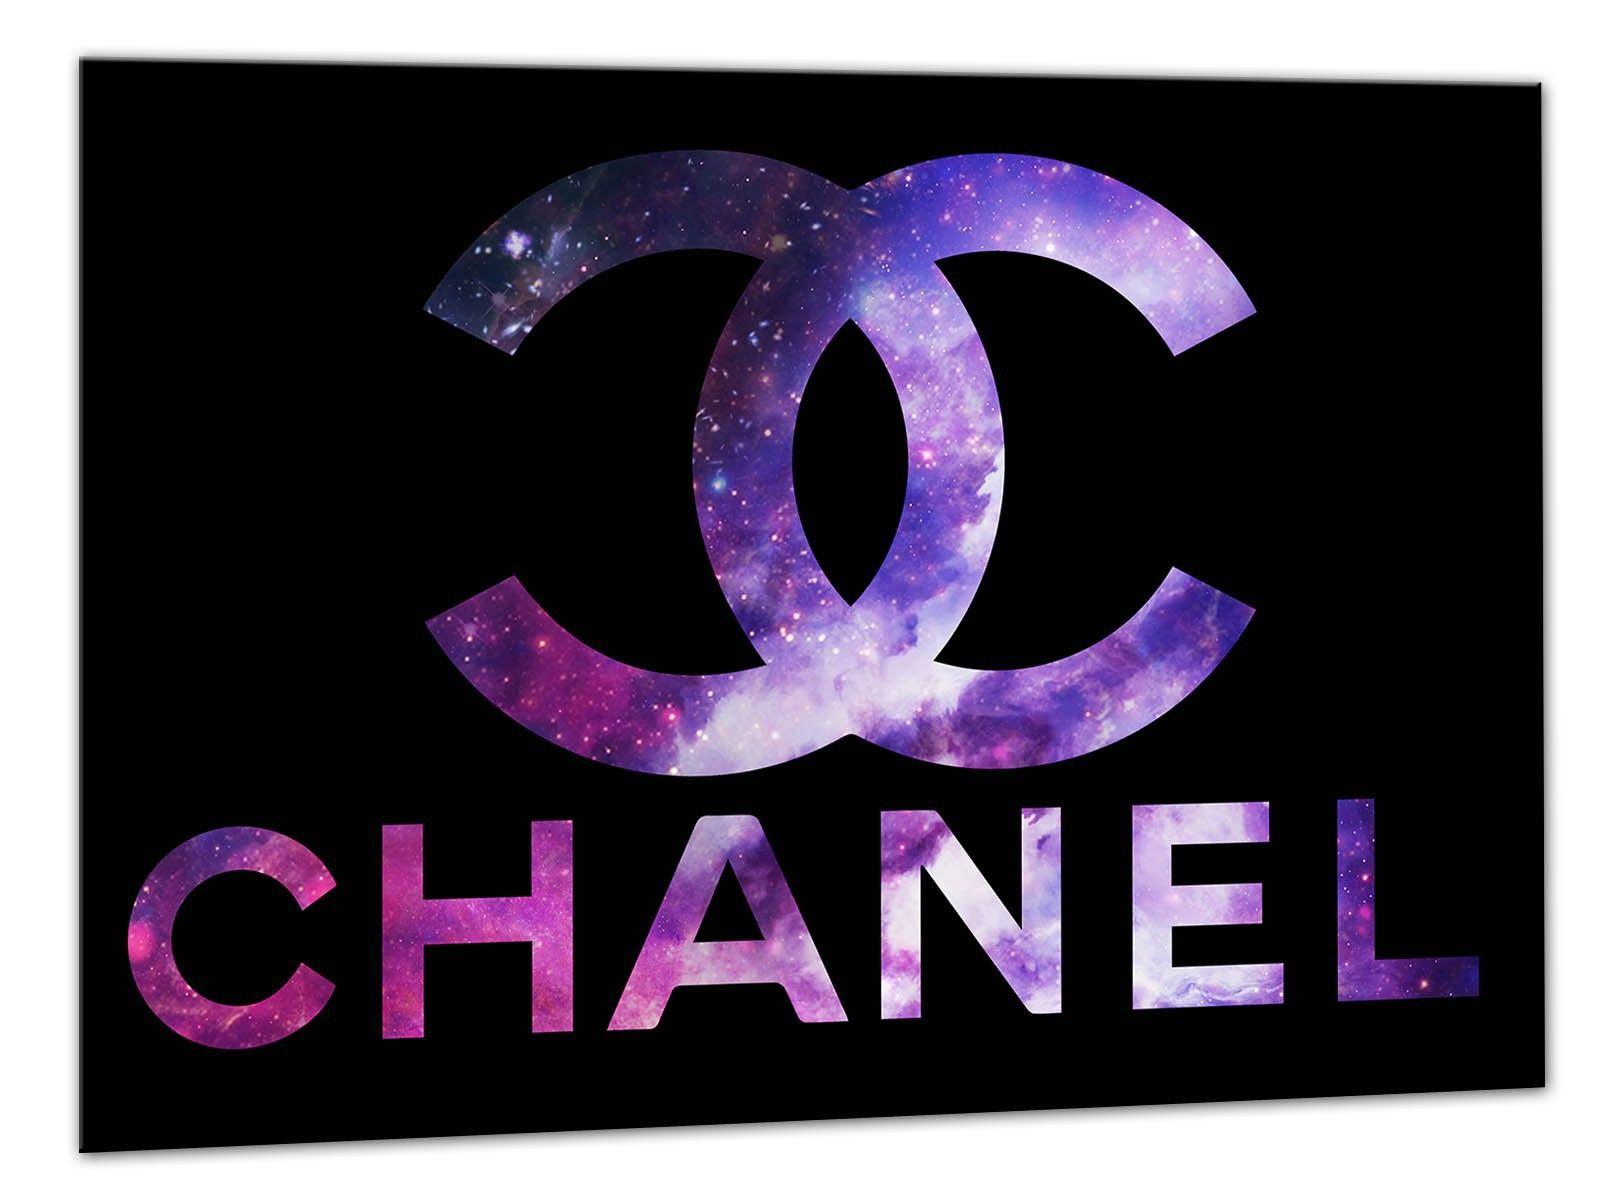 Chanel Galaxy Logo - Chanel painting inspiration galaxy logo, modern painting, canvas ...